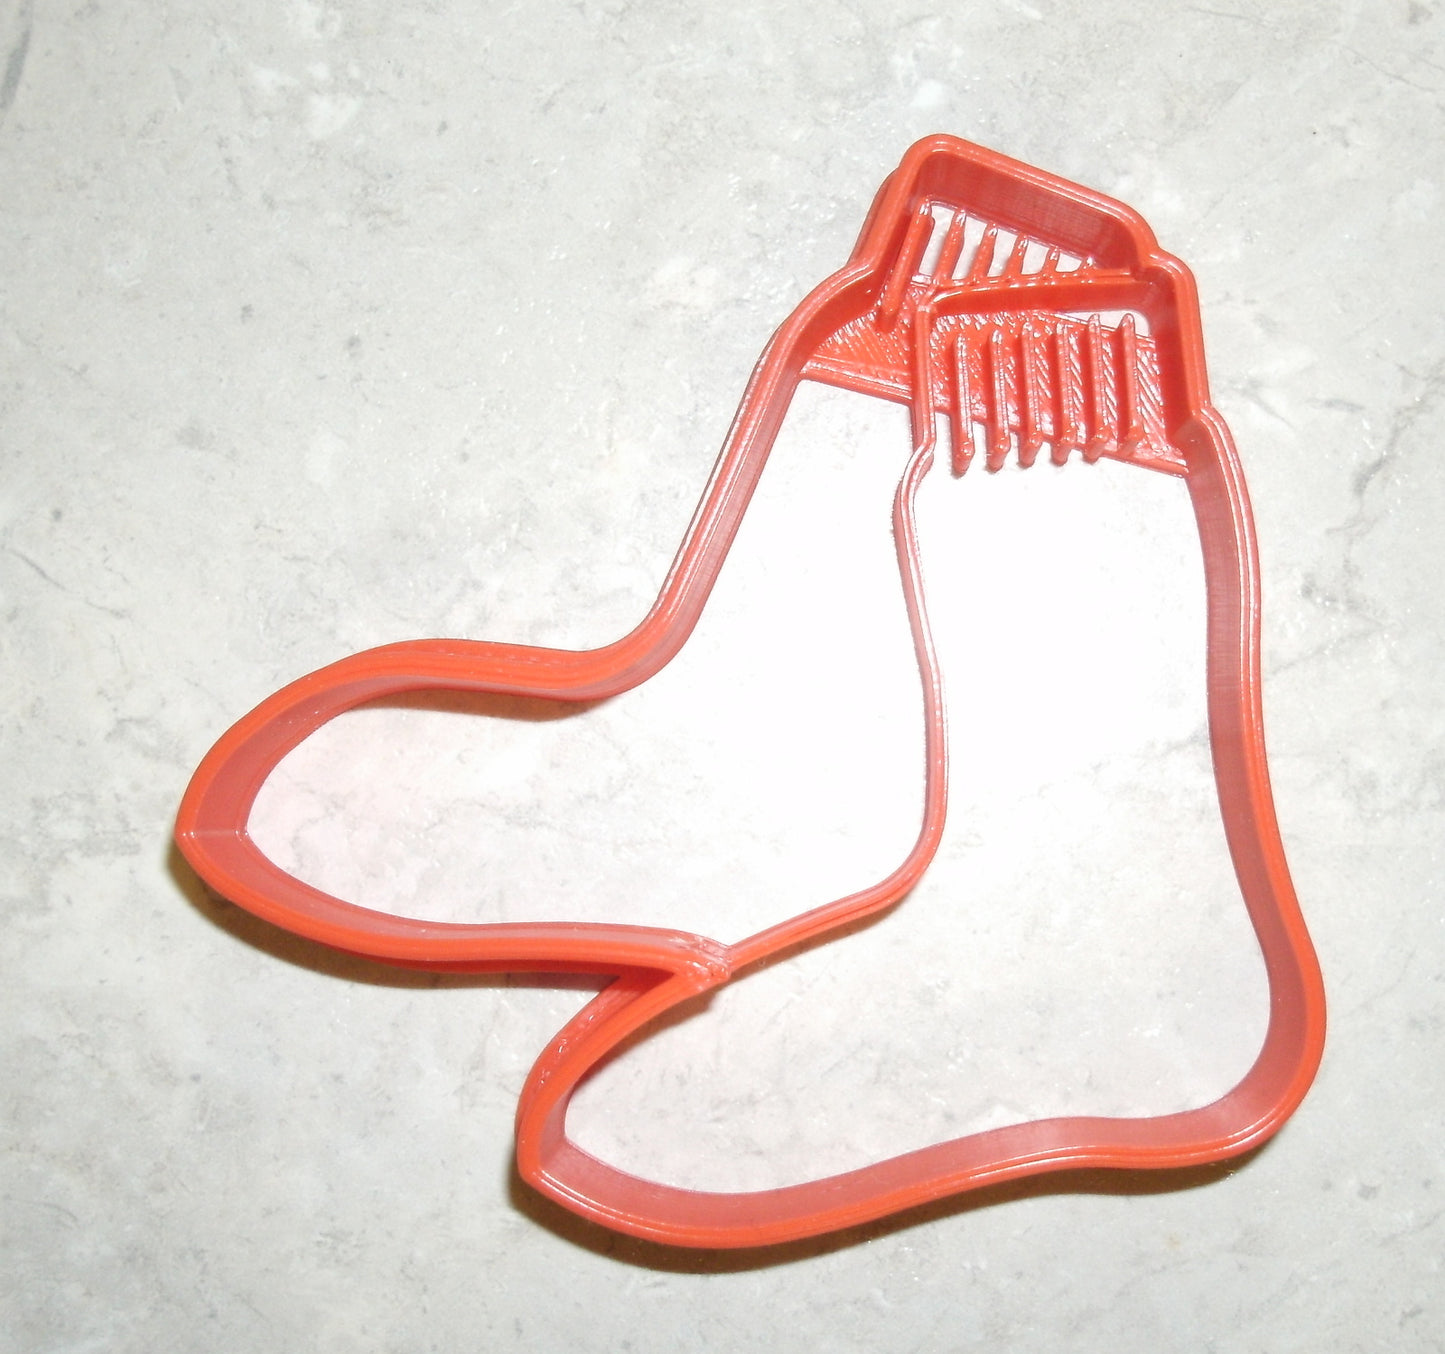 6x Boston Red Sox Socks Fondant Cutter Cupcake Topper Size 1.75" USA FD693